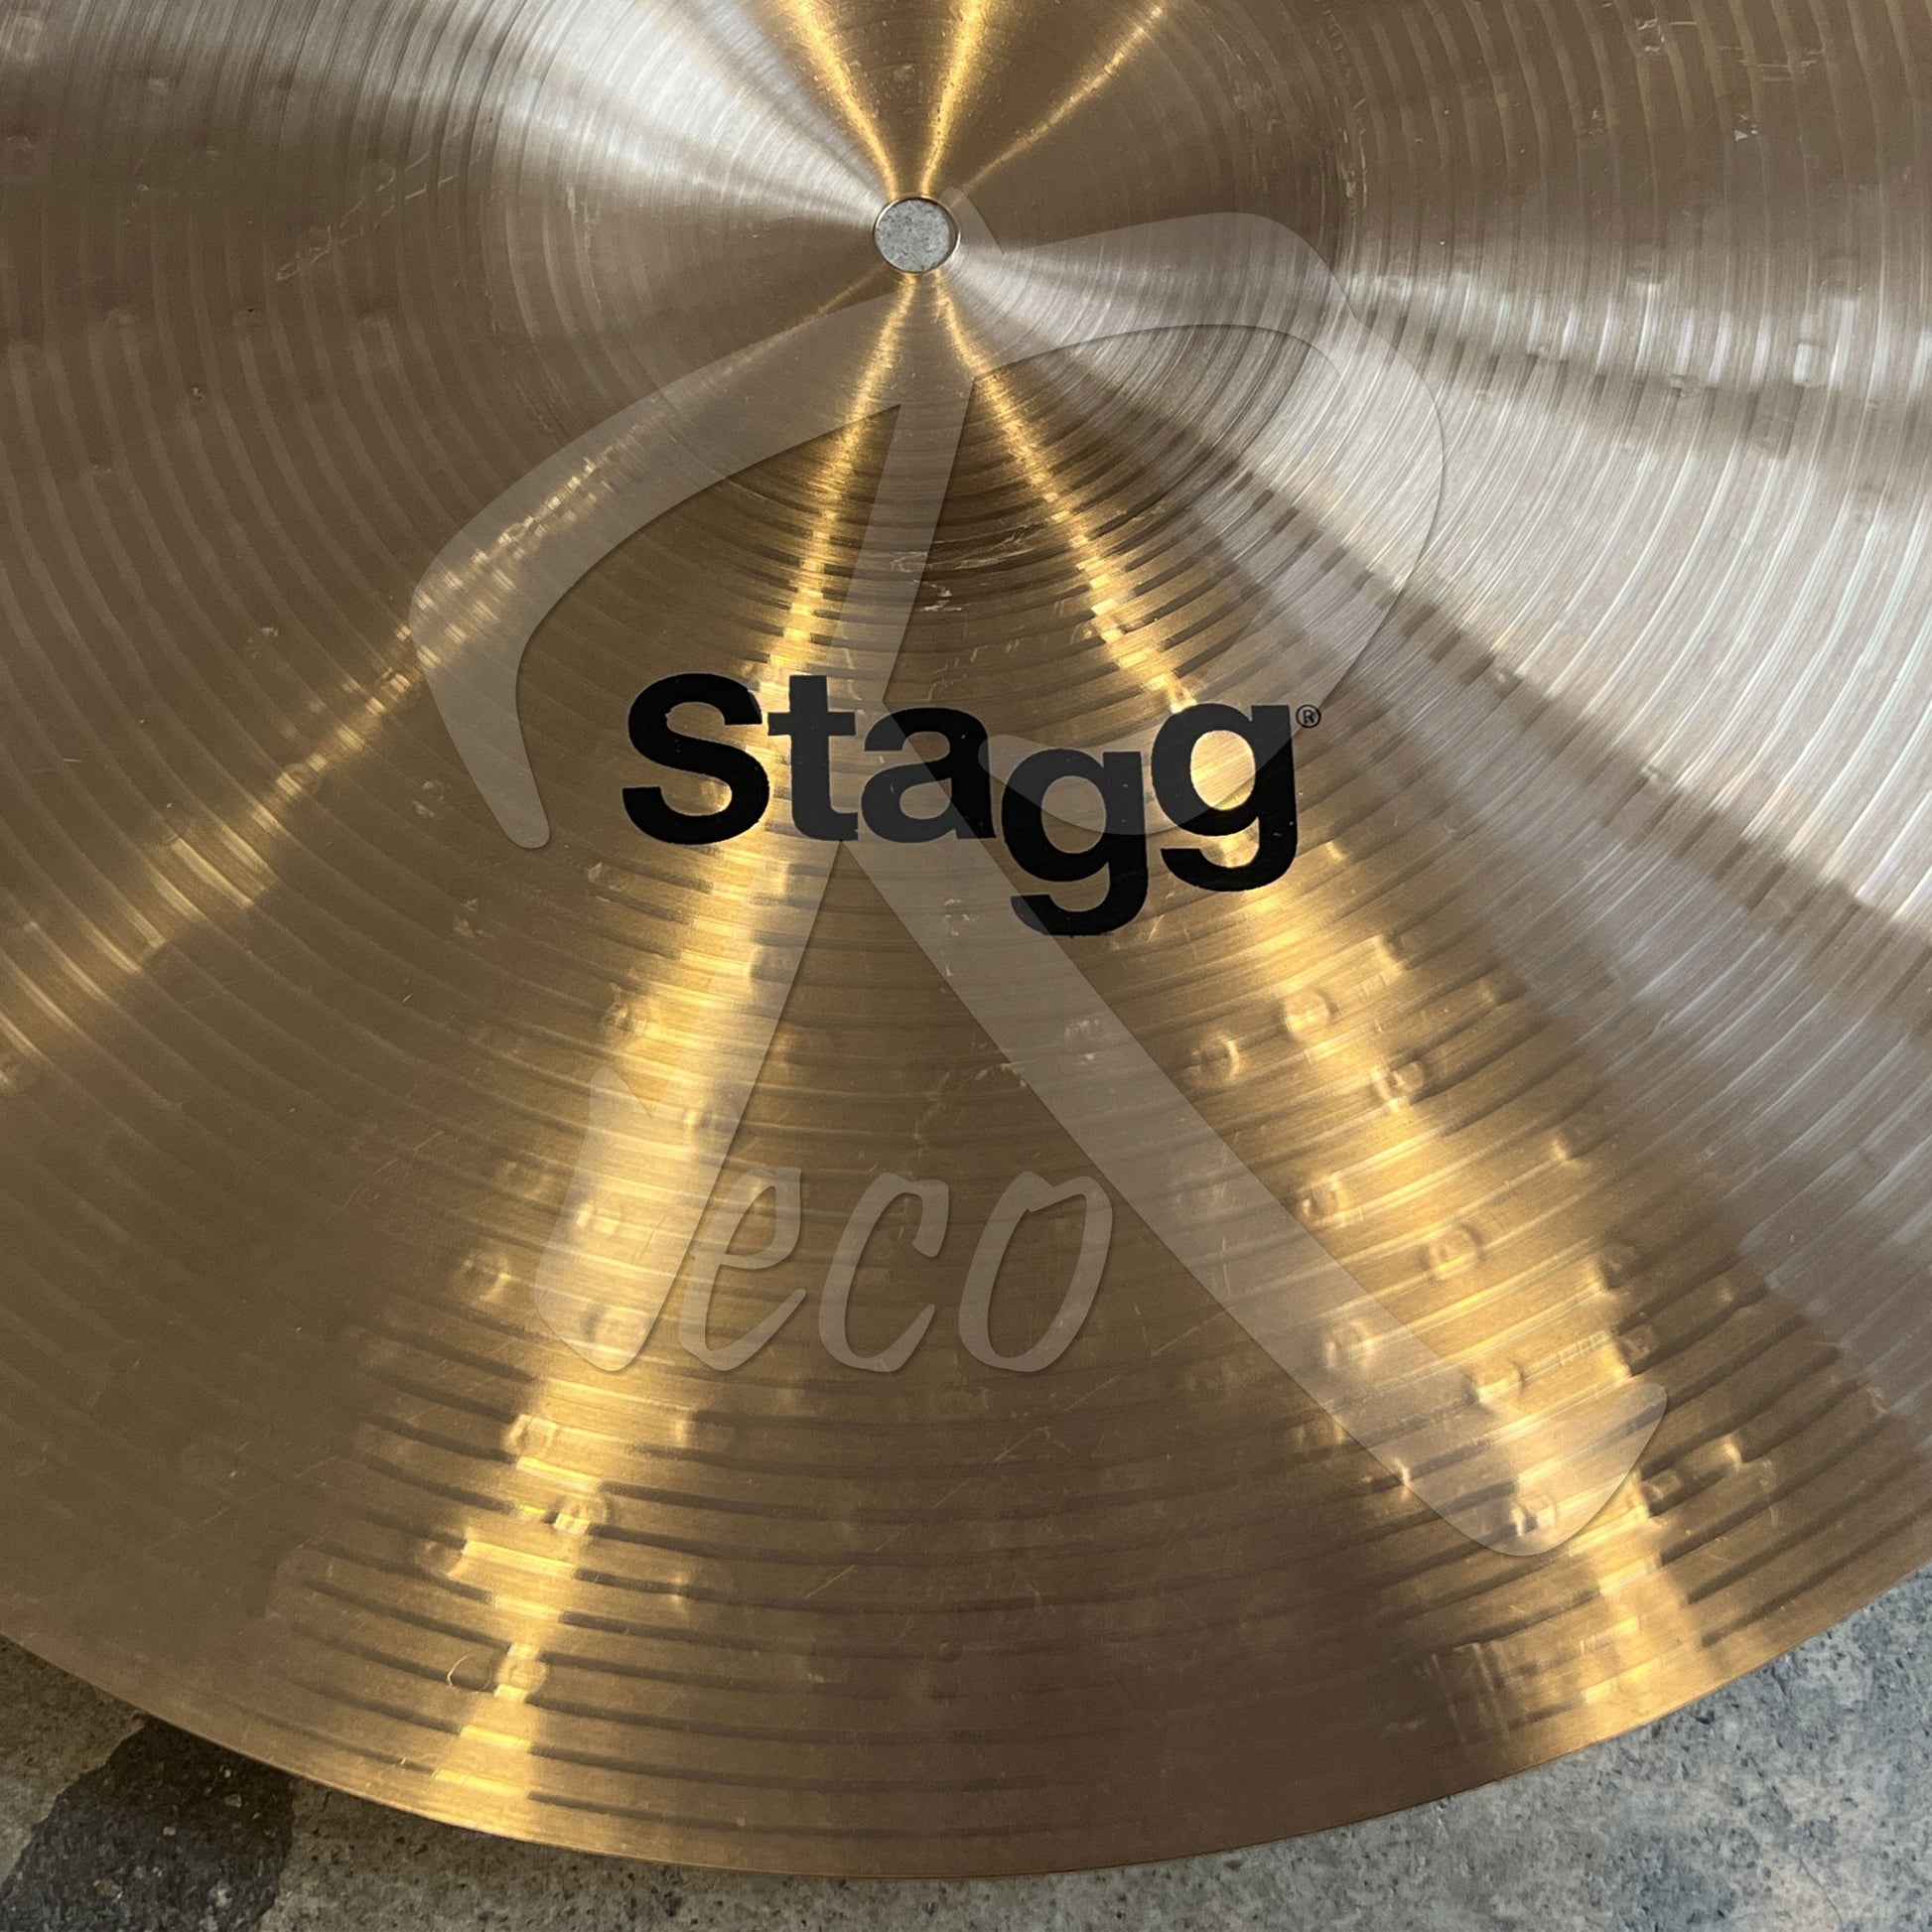 Stagg EX-RM20B 20” EX Brilliant Medium Ride Cymbal - Reco Music Malaysia